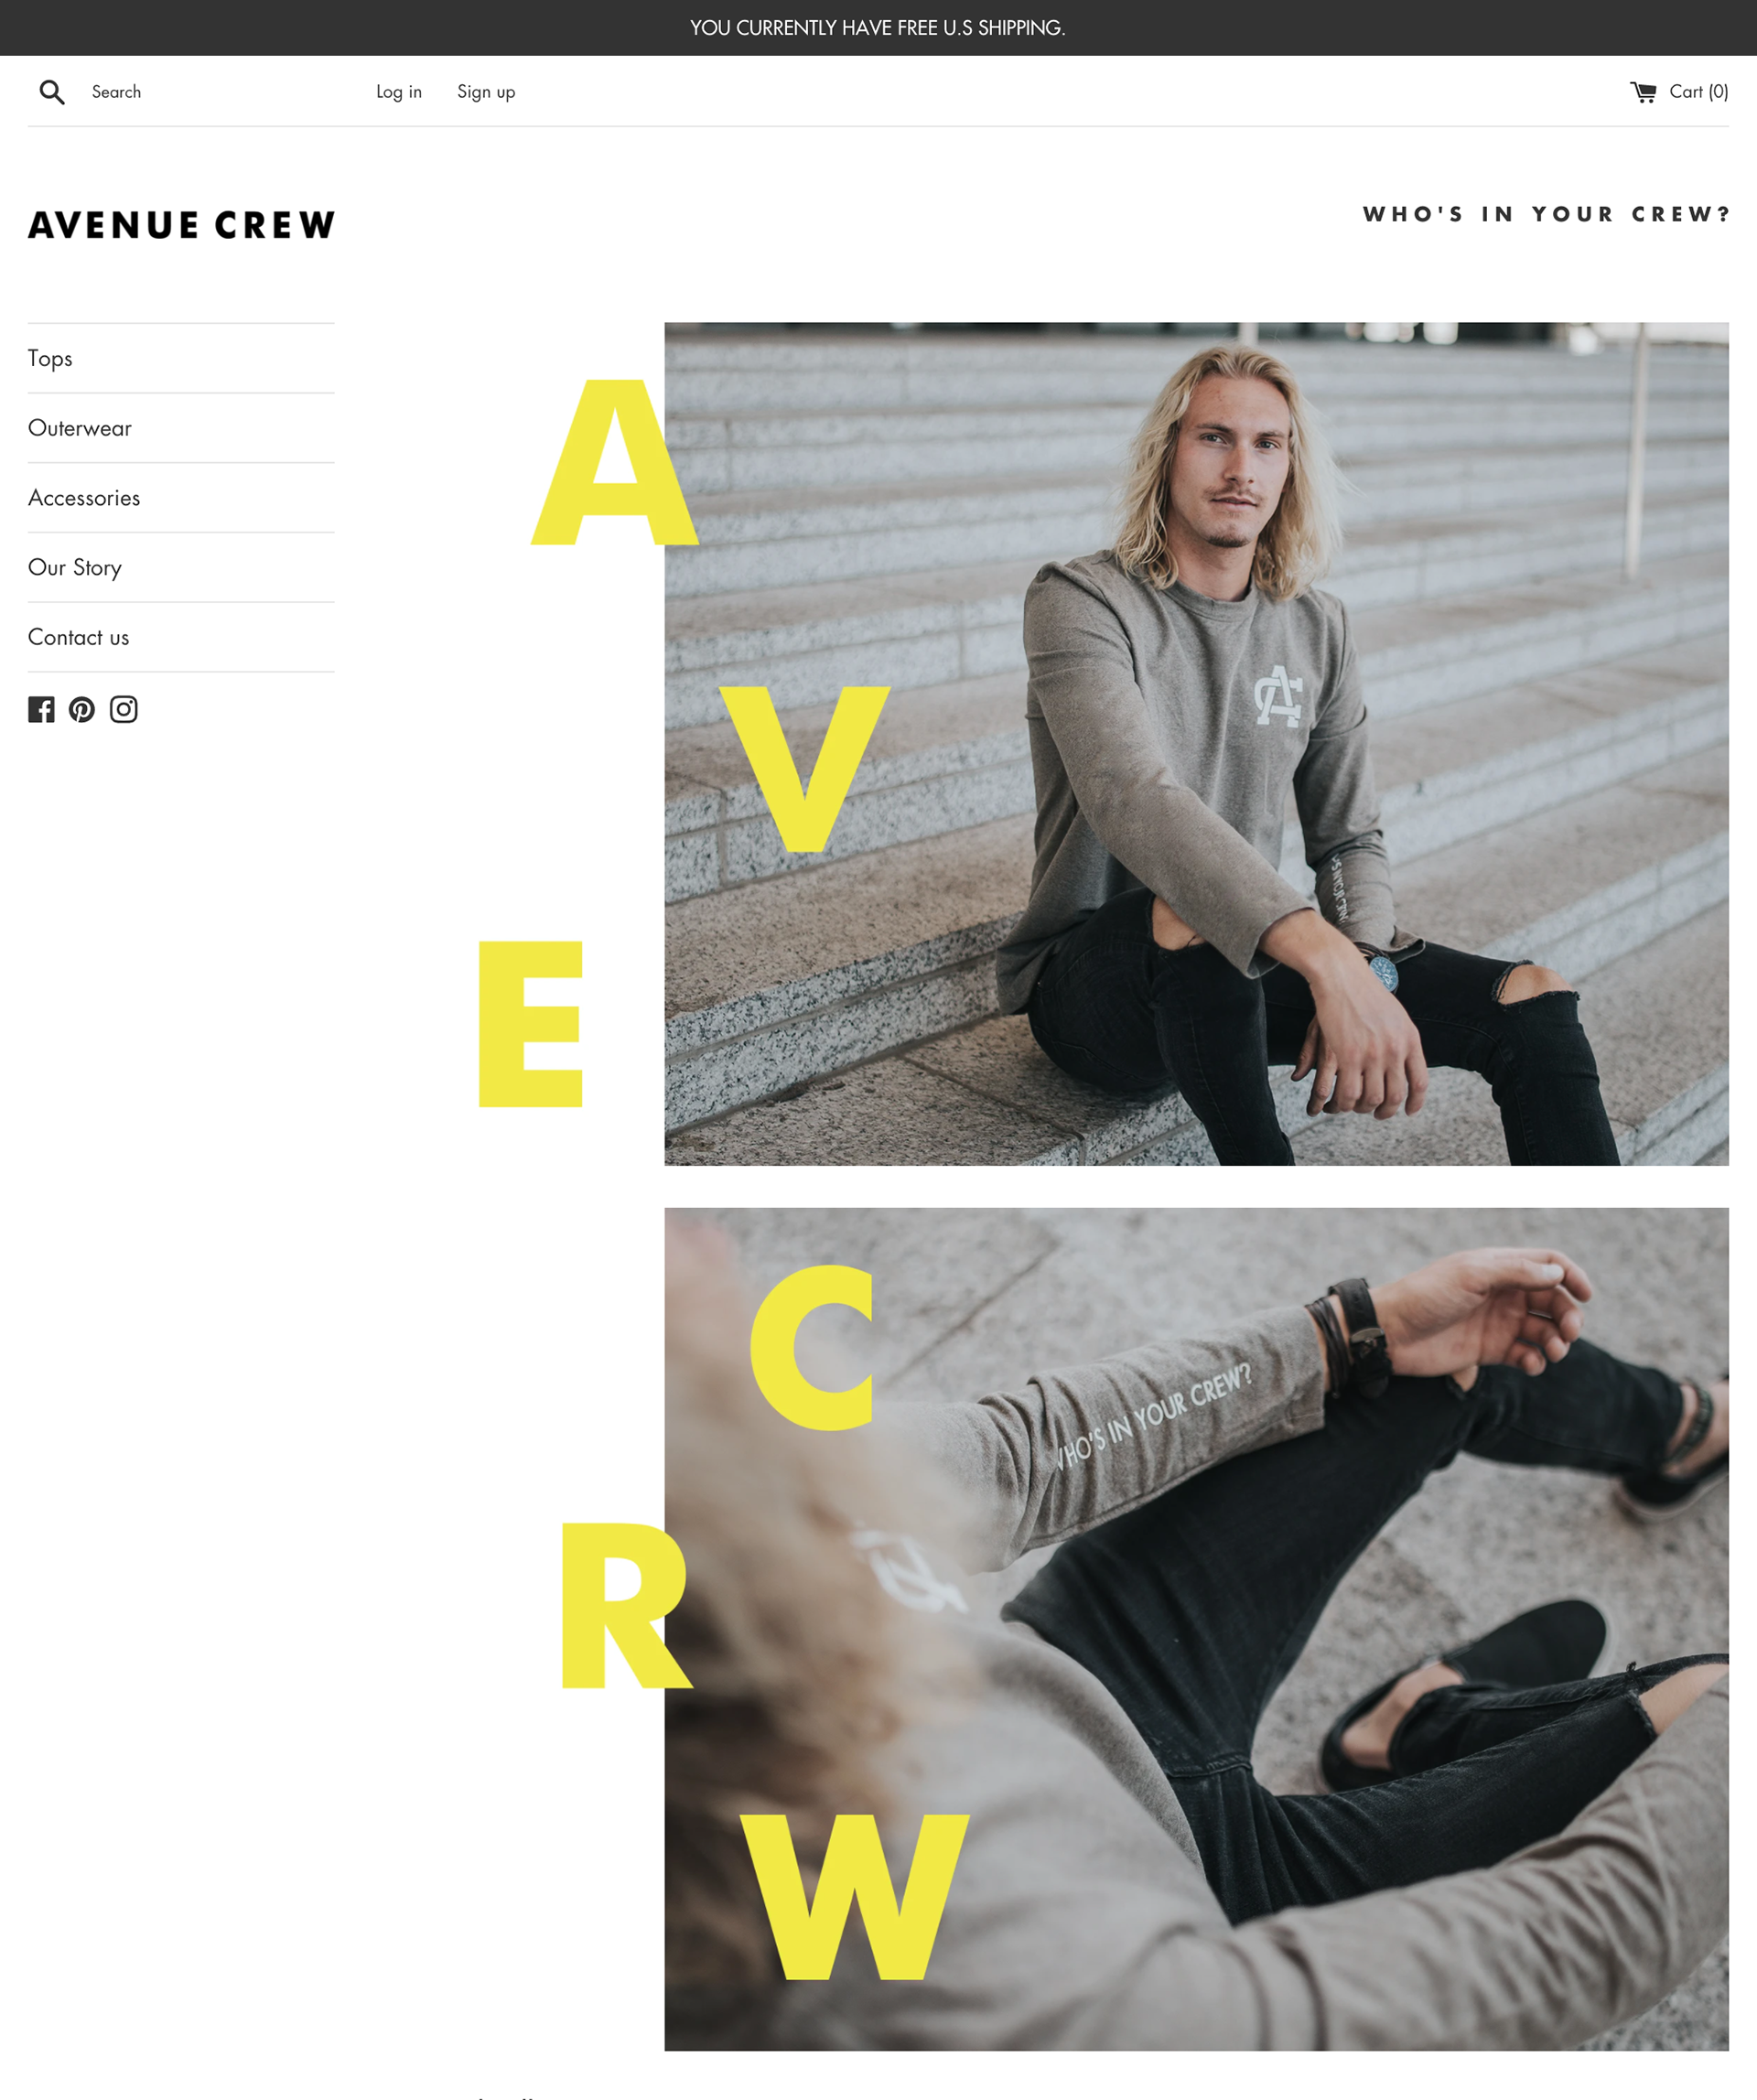 James Black Portfolio - Avenue Crew Clothing Brand